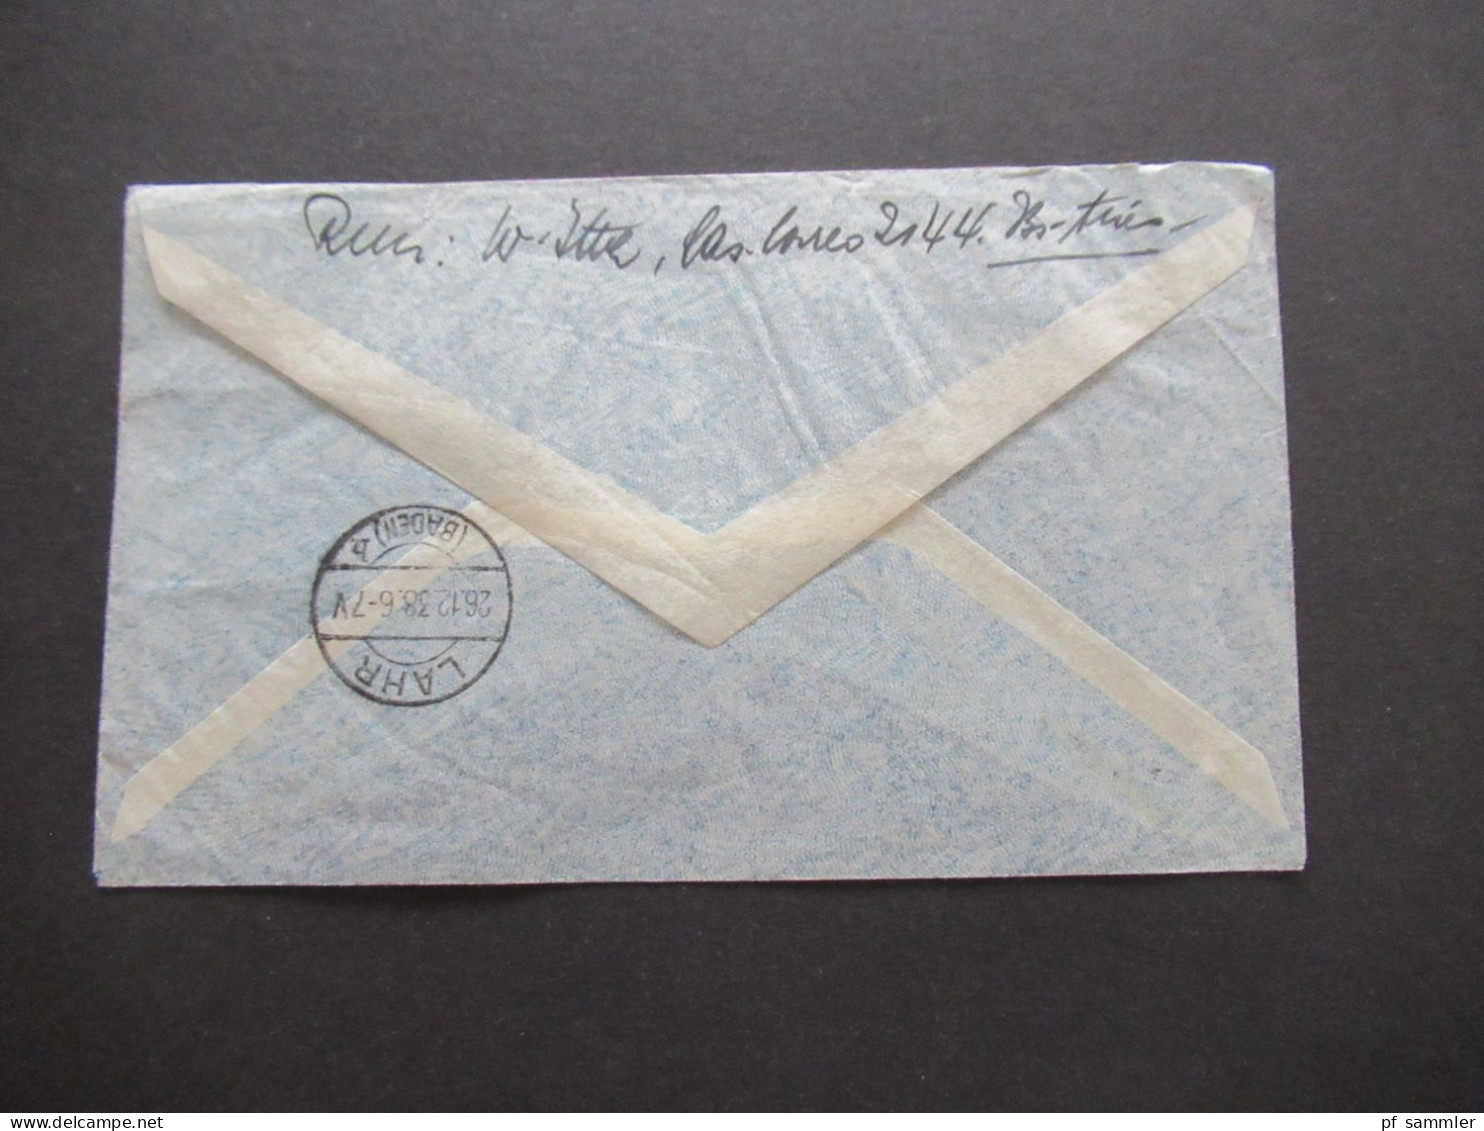 Argentinien 1938 Luftpost / Air Mail Via Condor / Buenos Aires - Lahr Schwarzwald / Certificado Registered Letter - Lettres & Documents